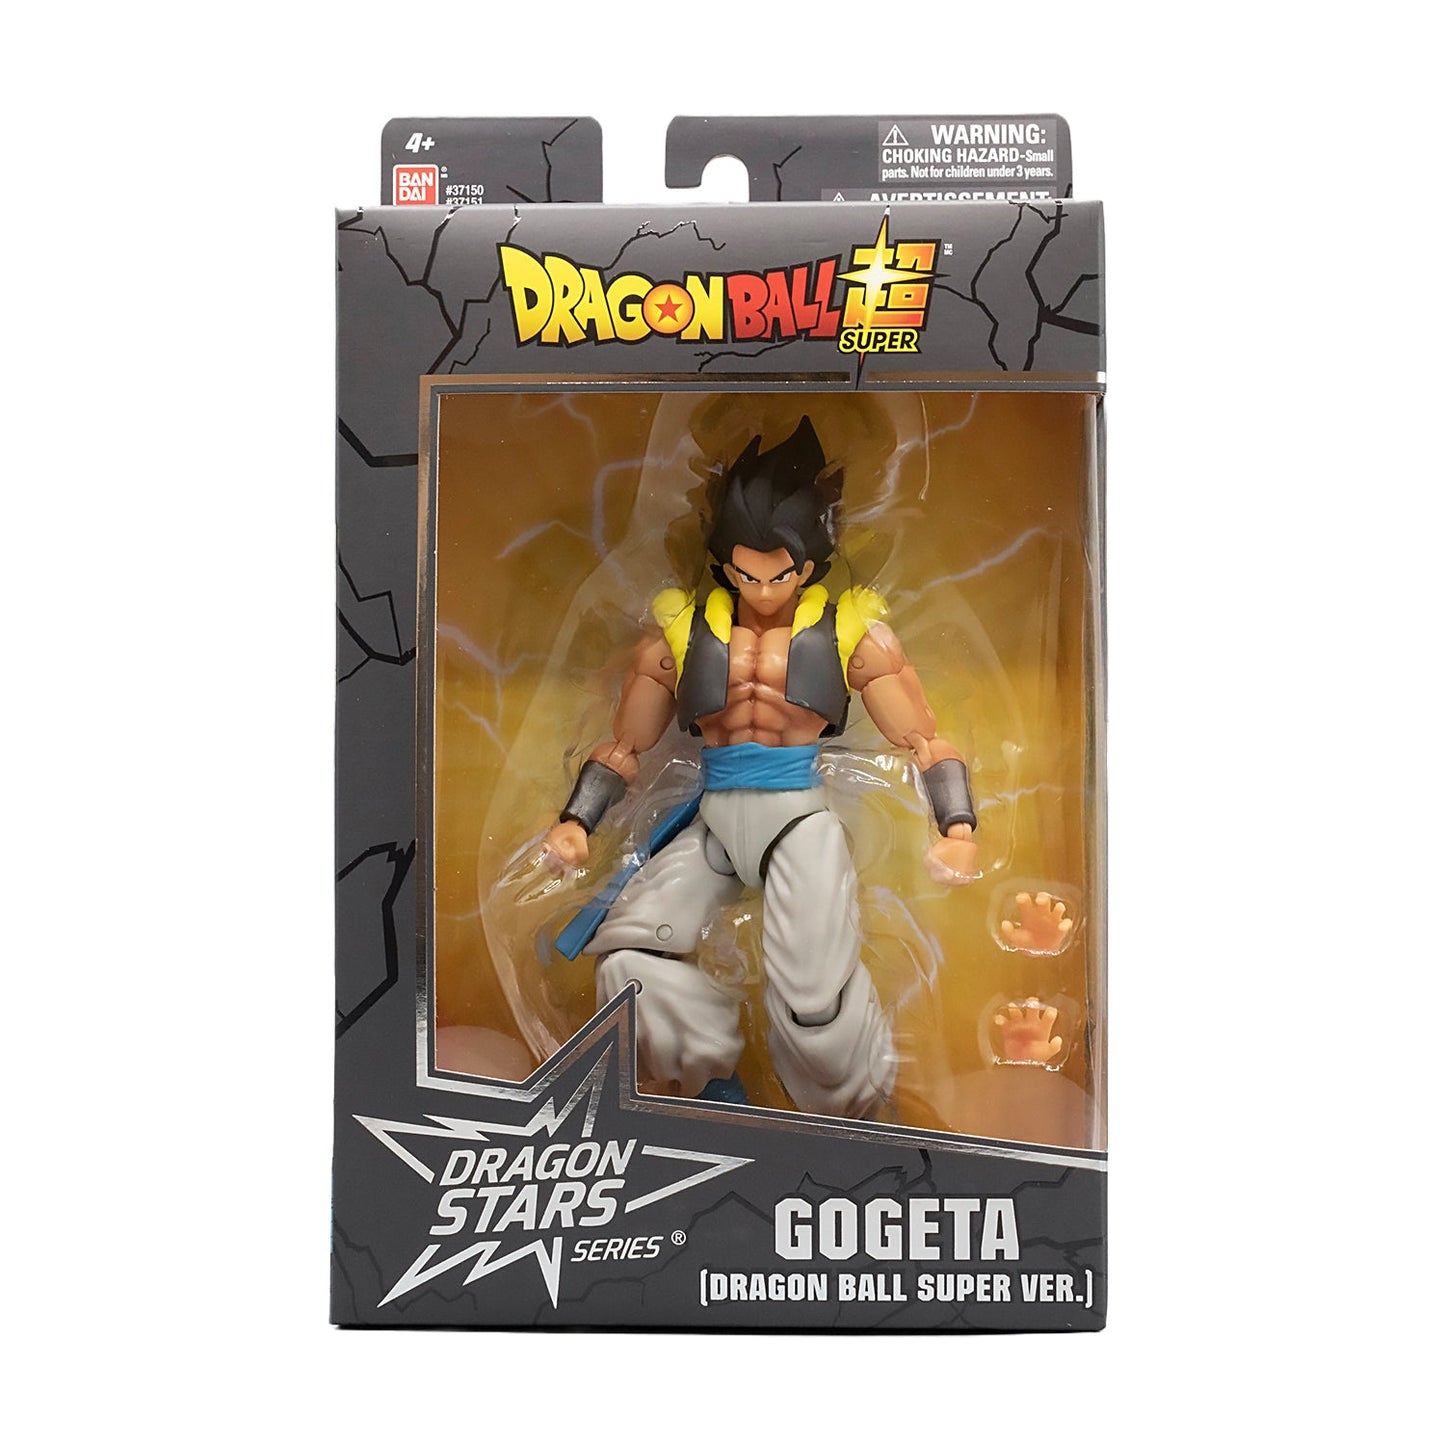 Dragonball Super Dragon Stars Series Gogeta Action Figure